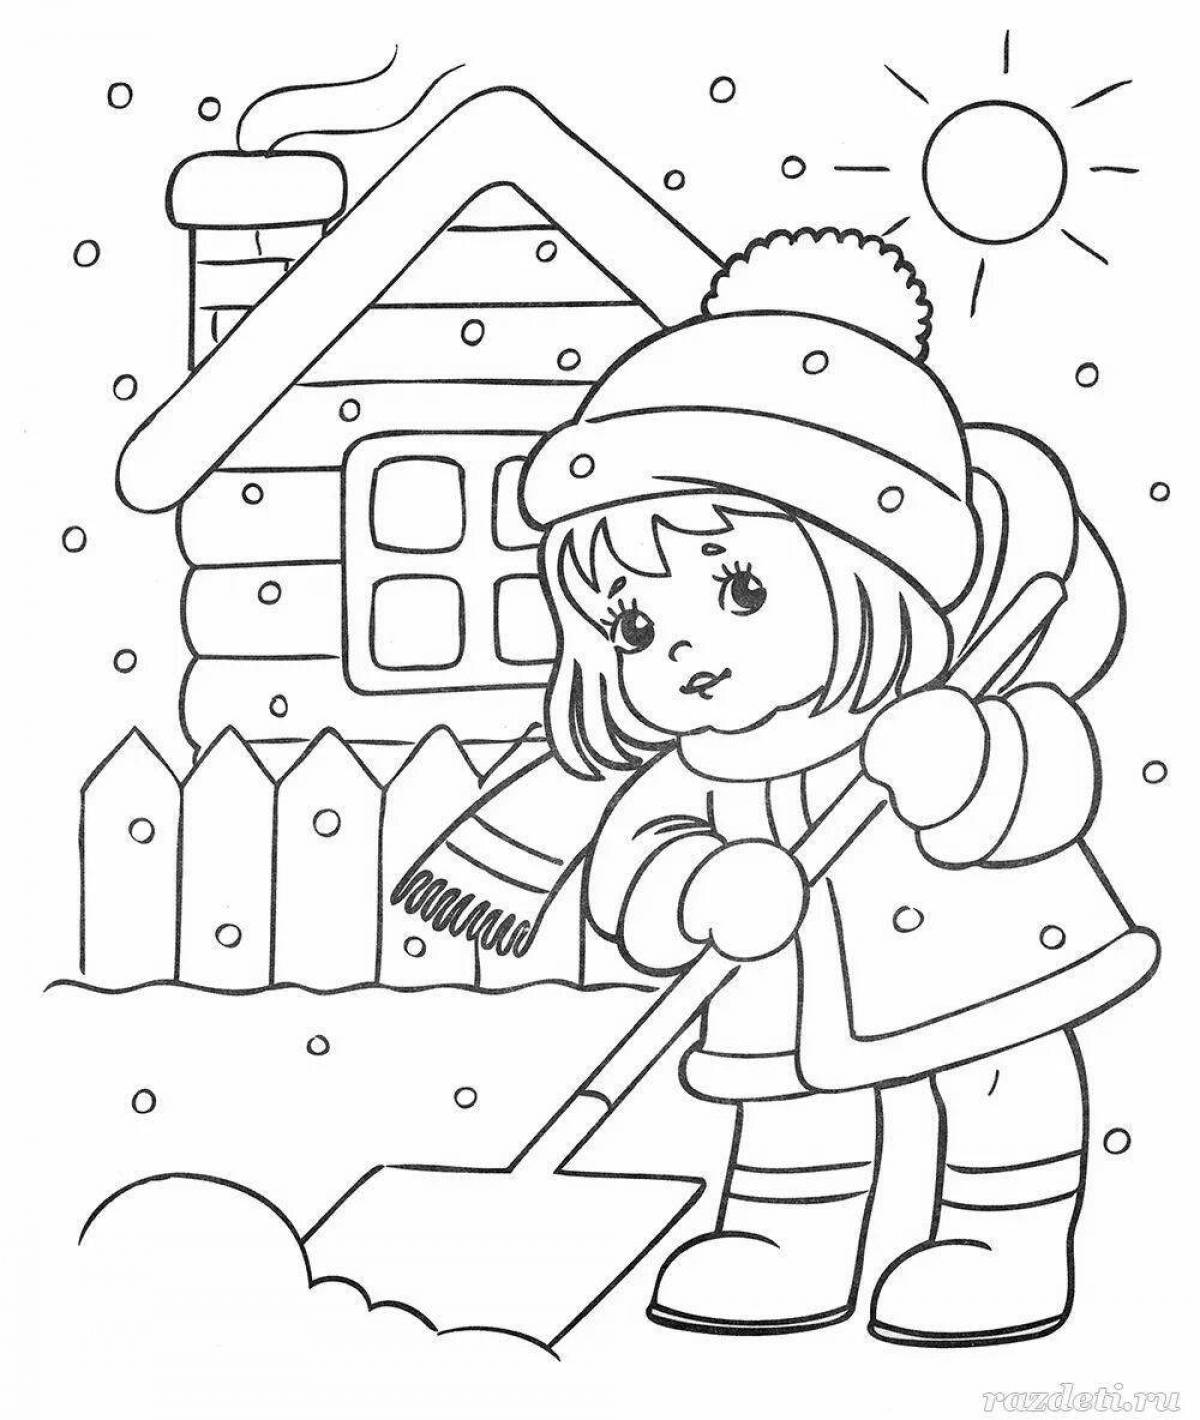 Joyful winter coloring book for kids